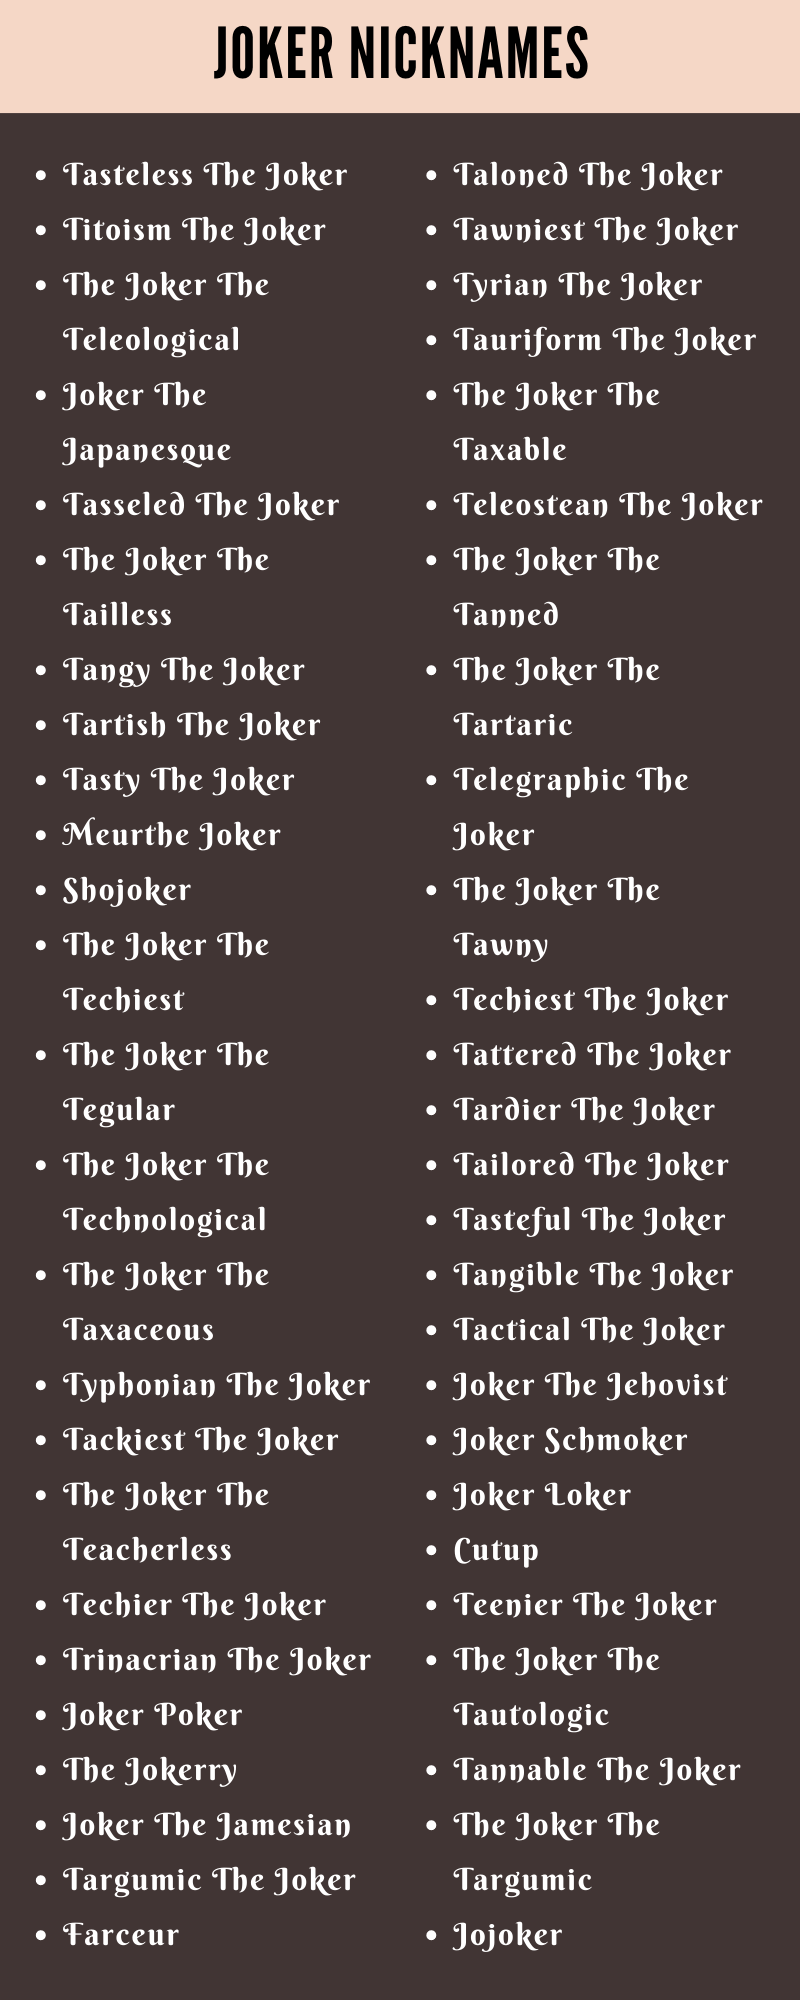 Joker Nicknames